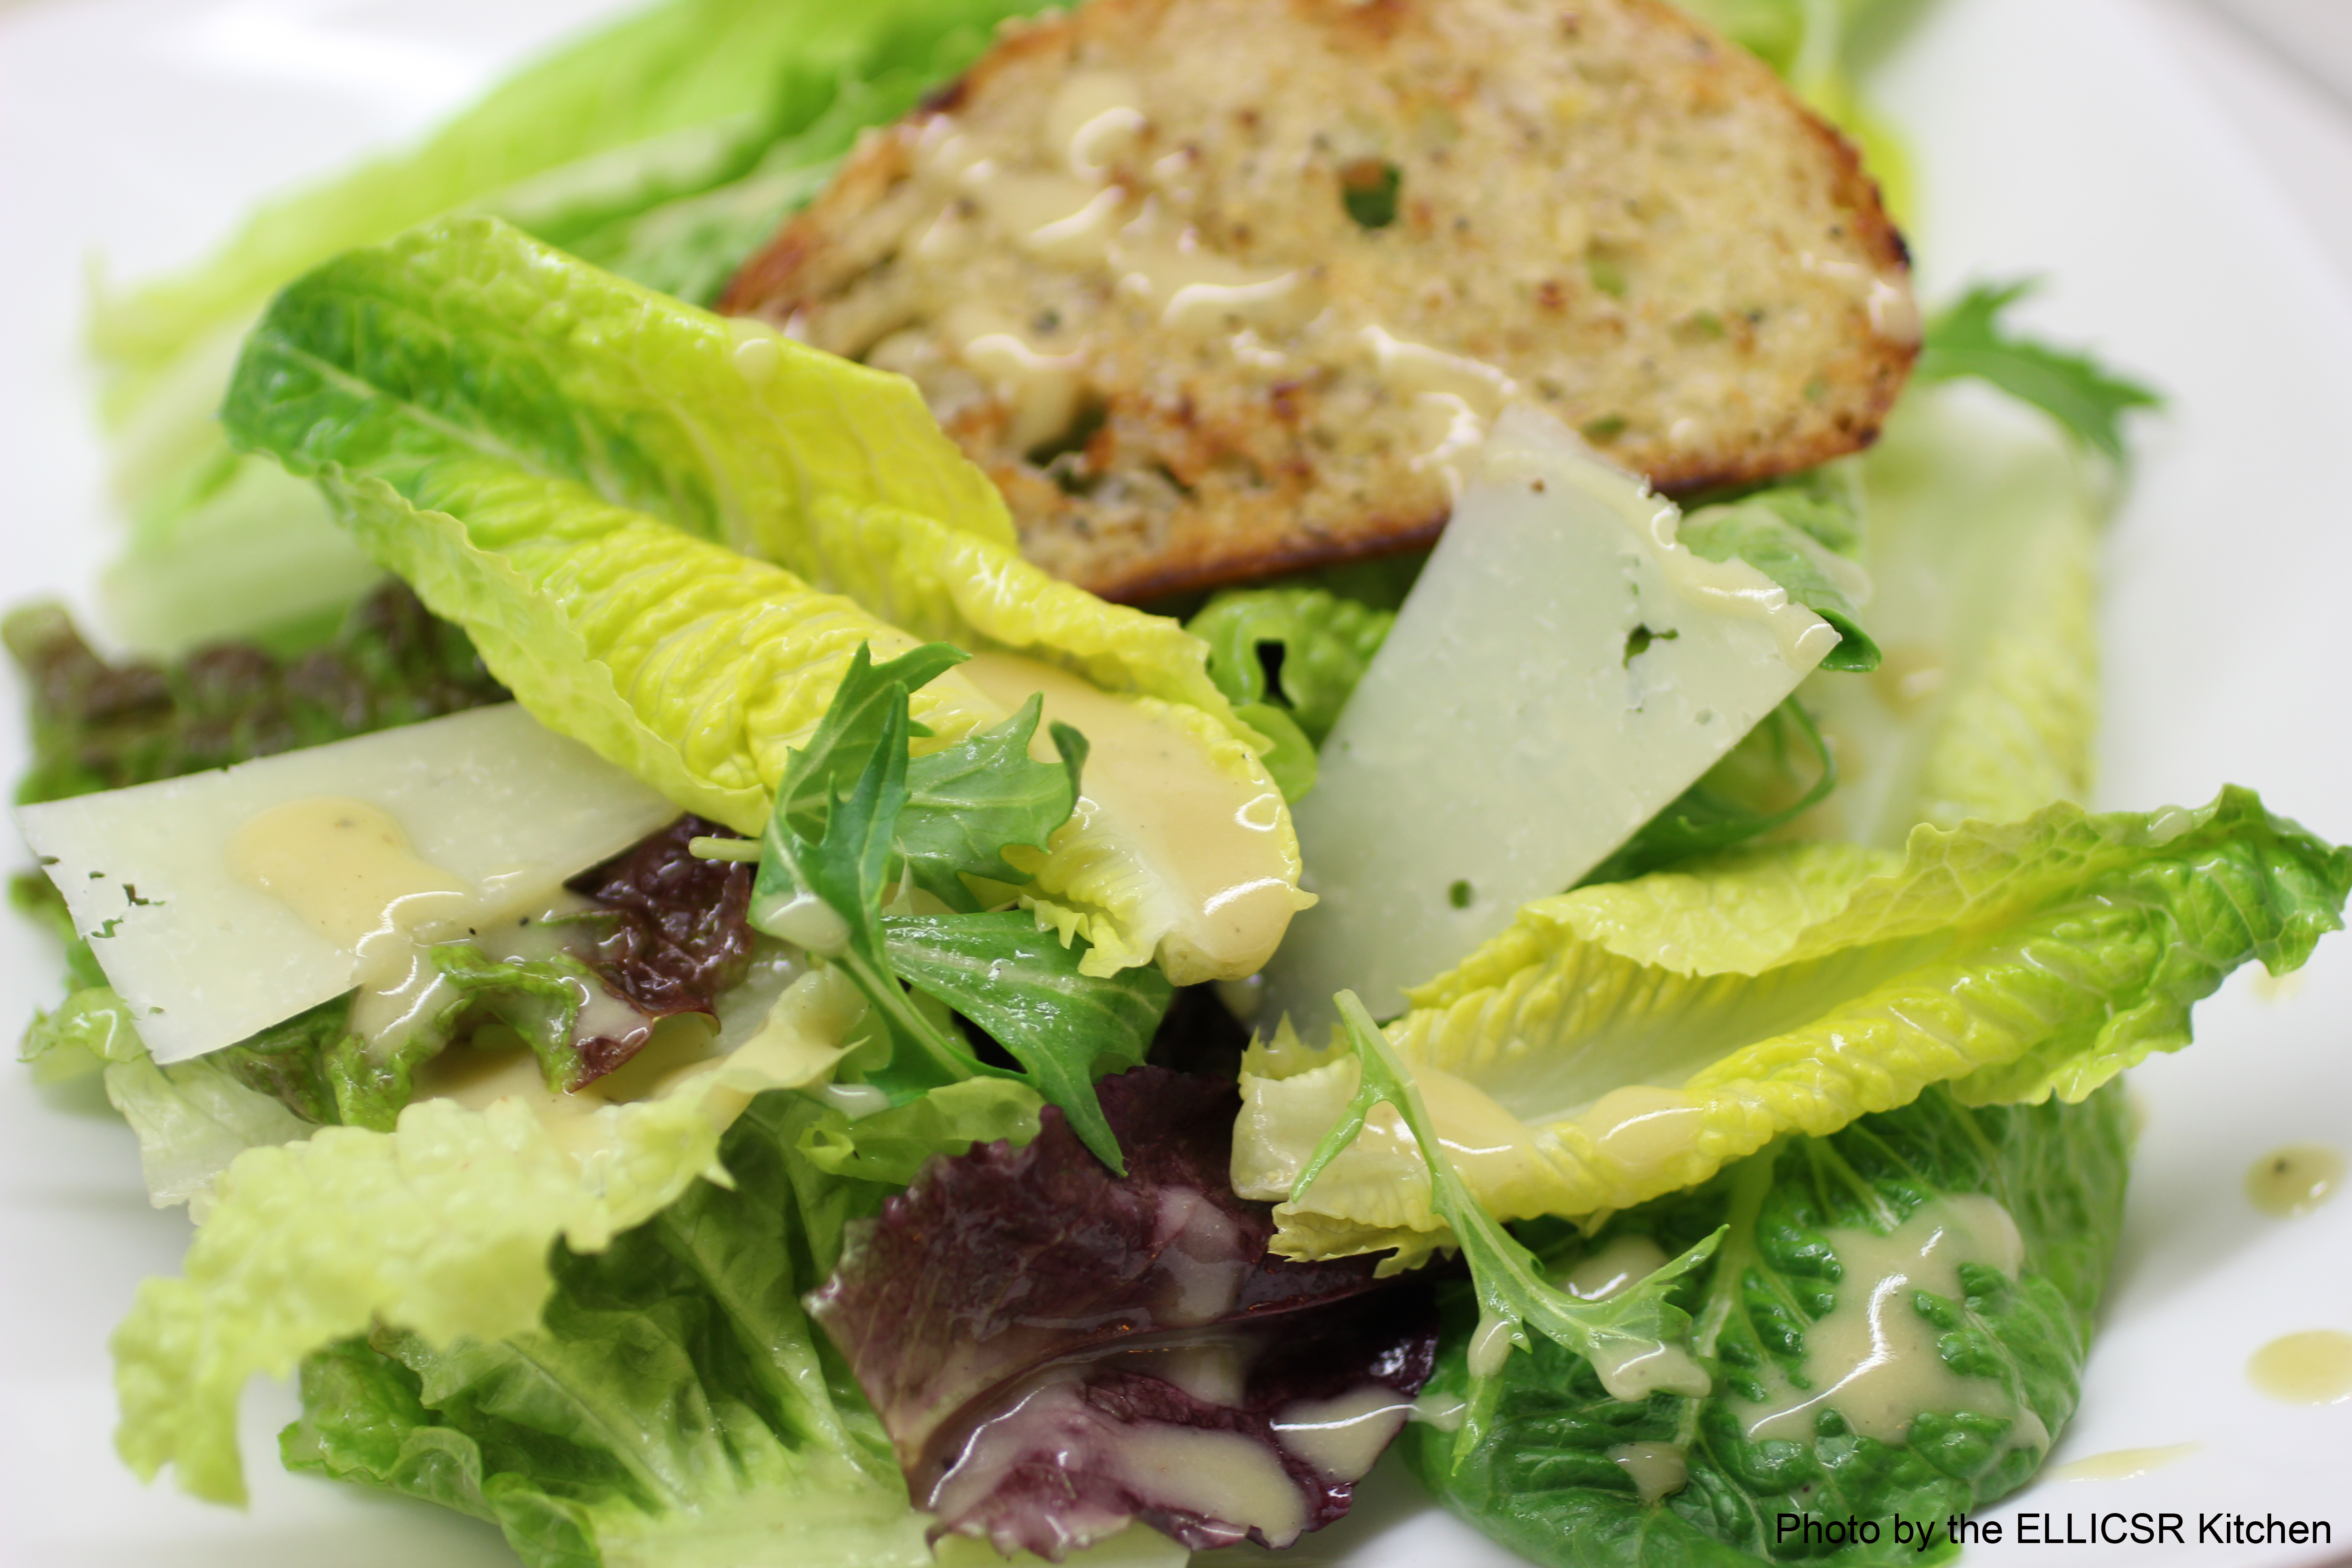 Image of caesar salad